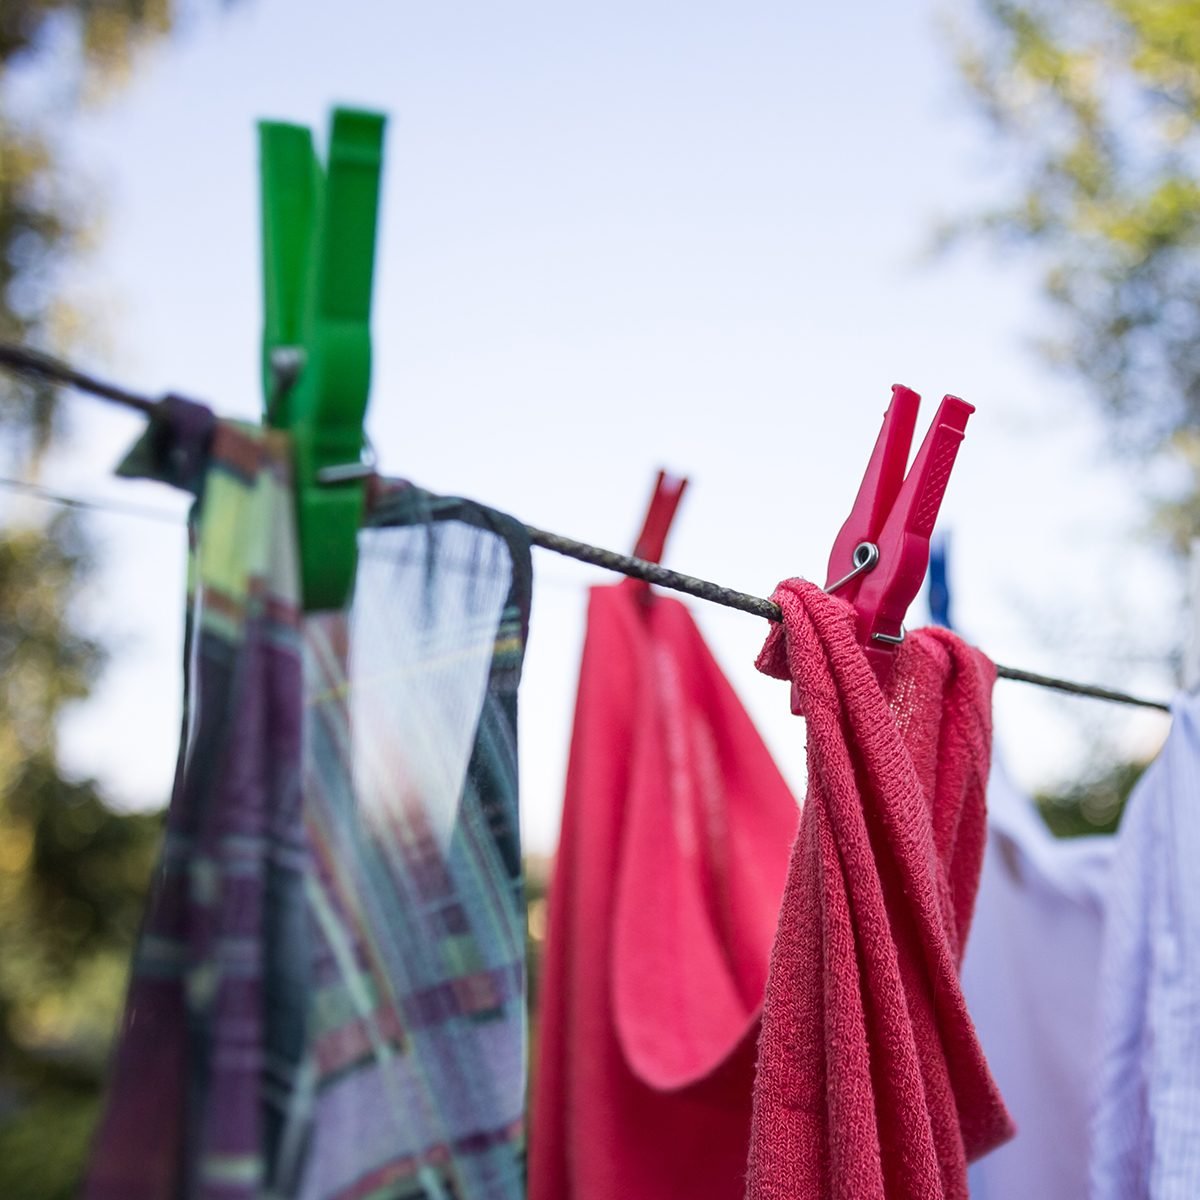 https://www.tasteofhome.com/wp-content/uploads/2019/08/drying-clothes-outside-shutterstock_313307258.jpg